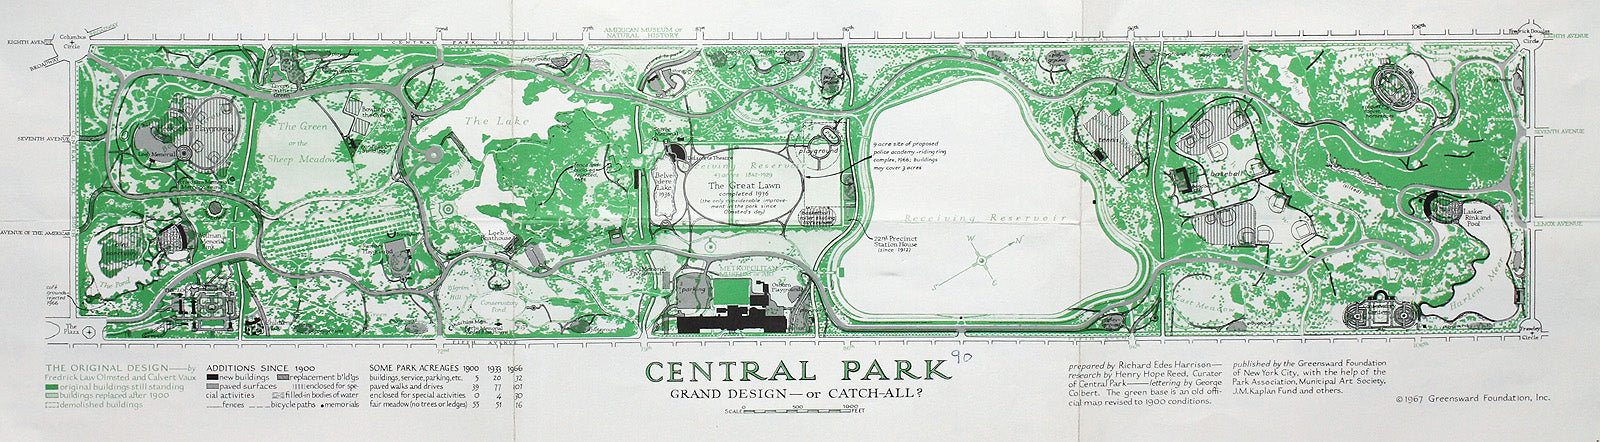 (NY - Central Park) Central Park Grand Design..